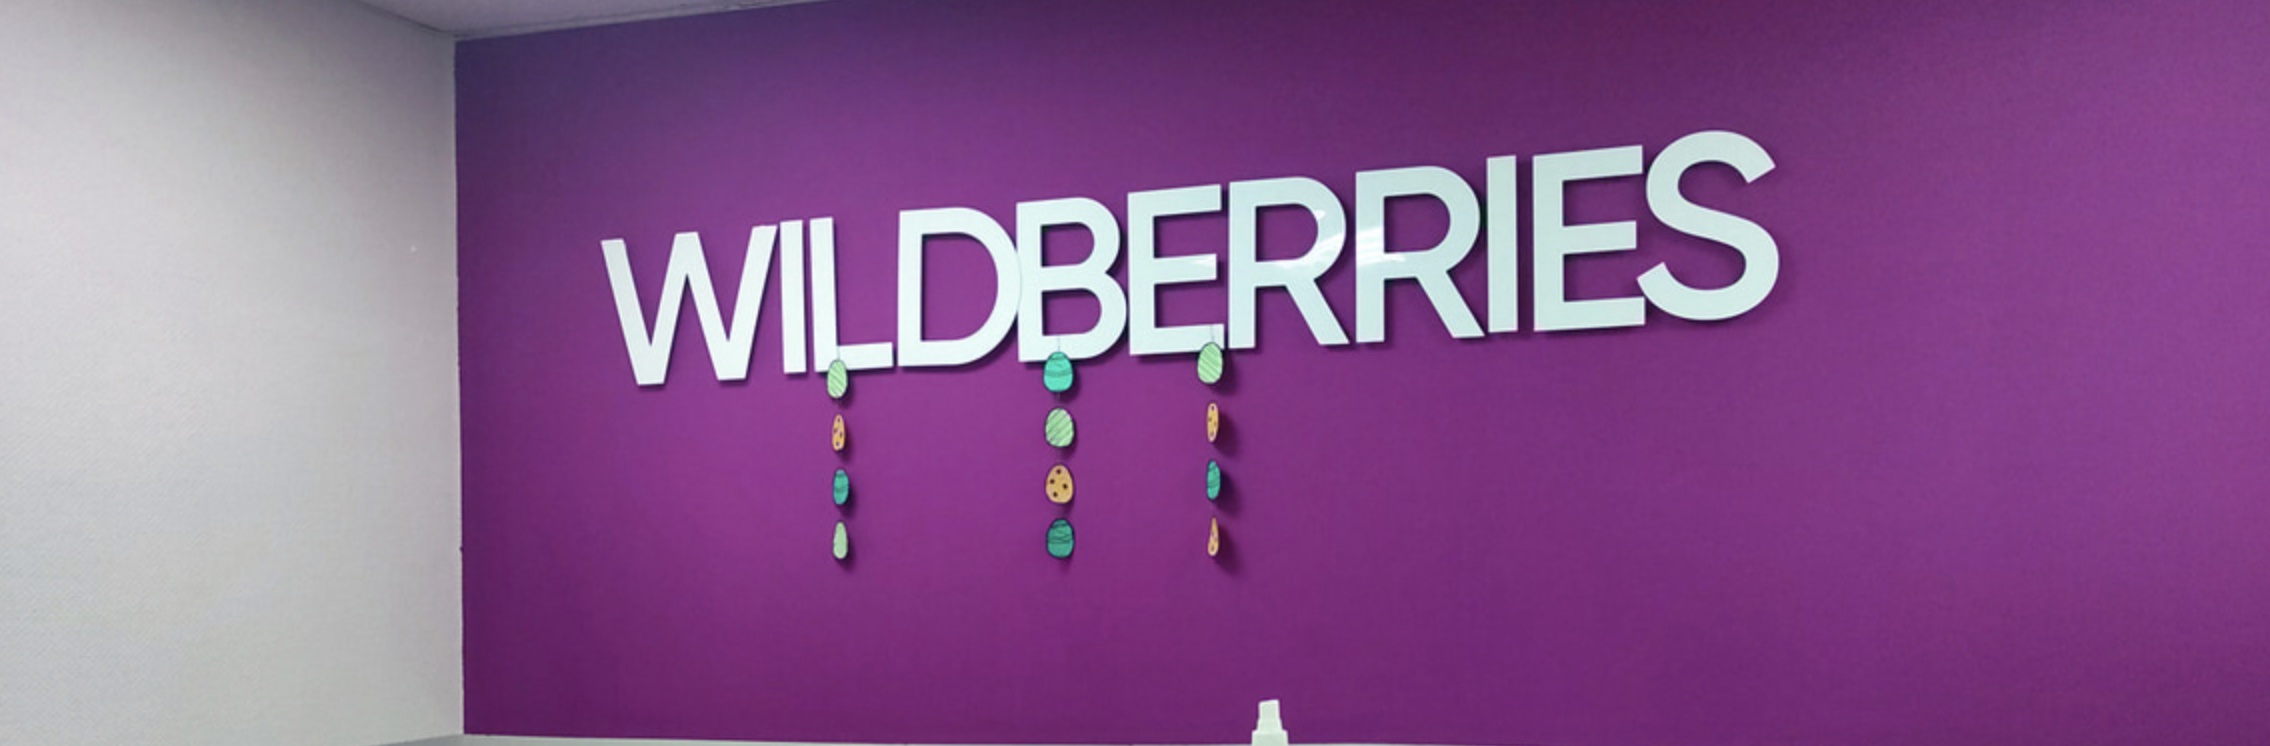 Wildberries намерен ввести новое правило отмены заказа